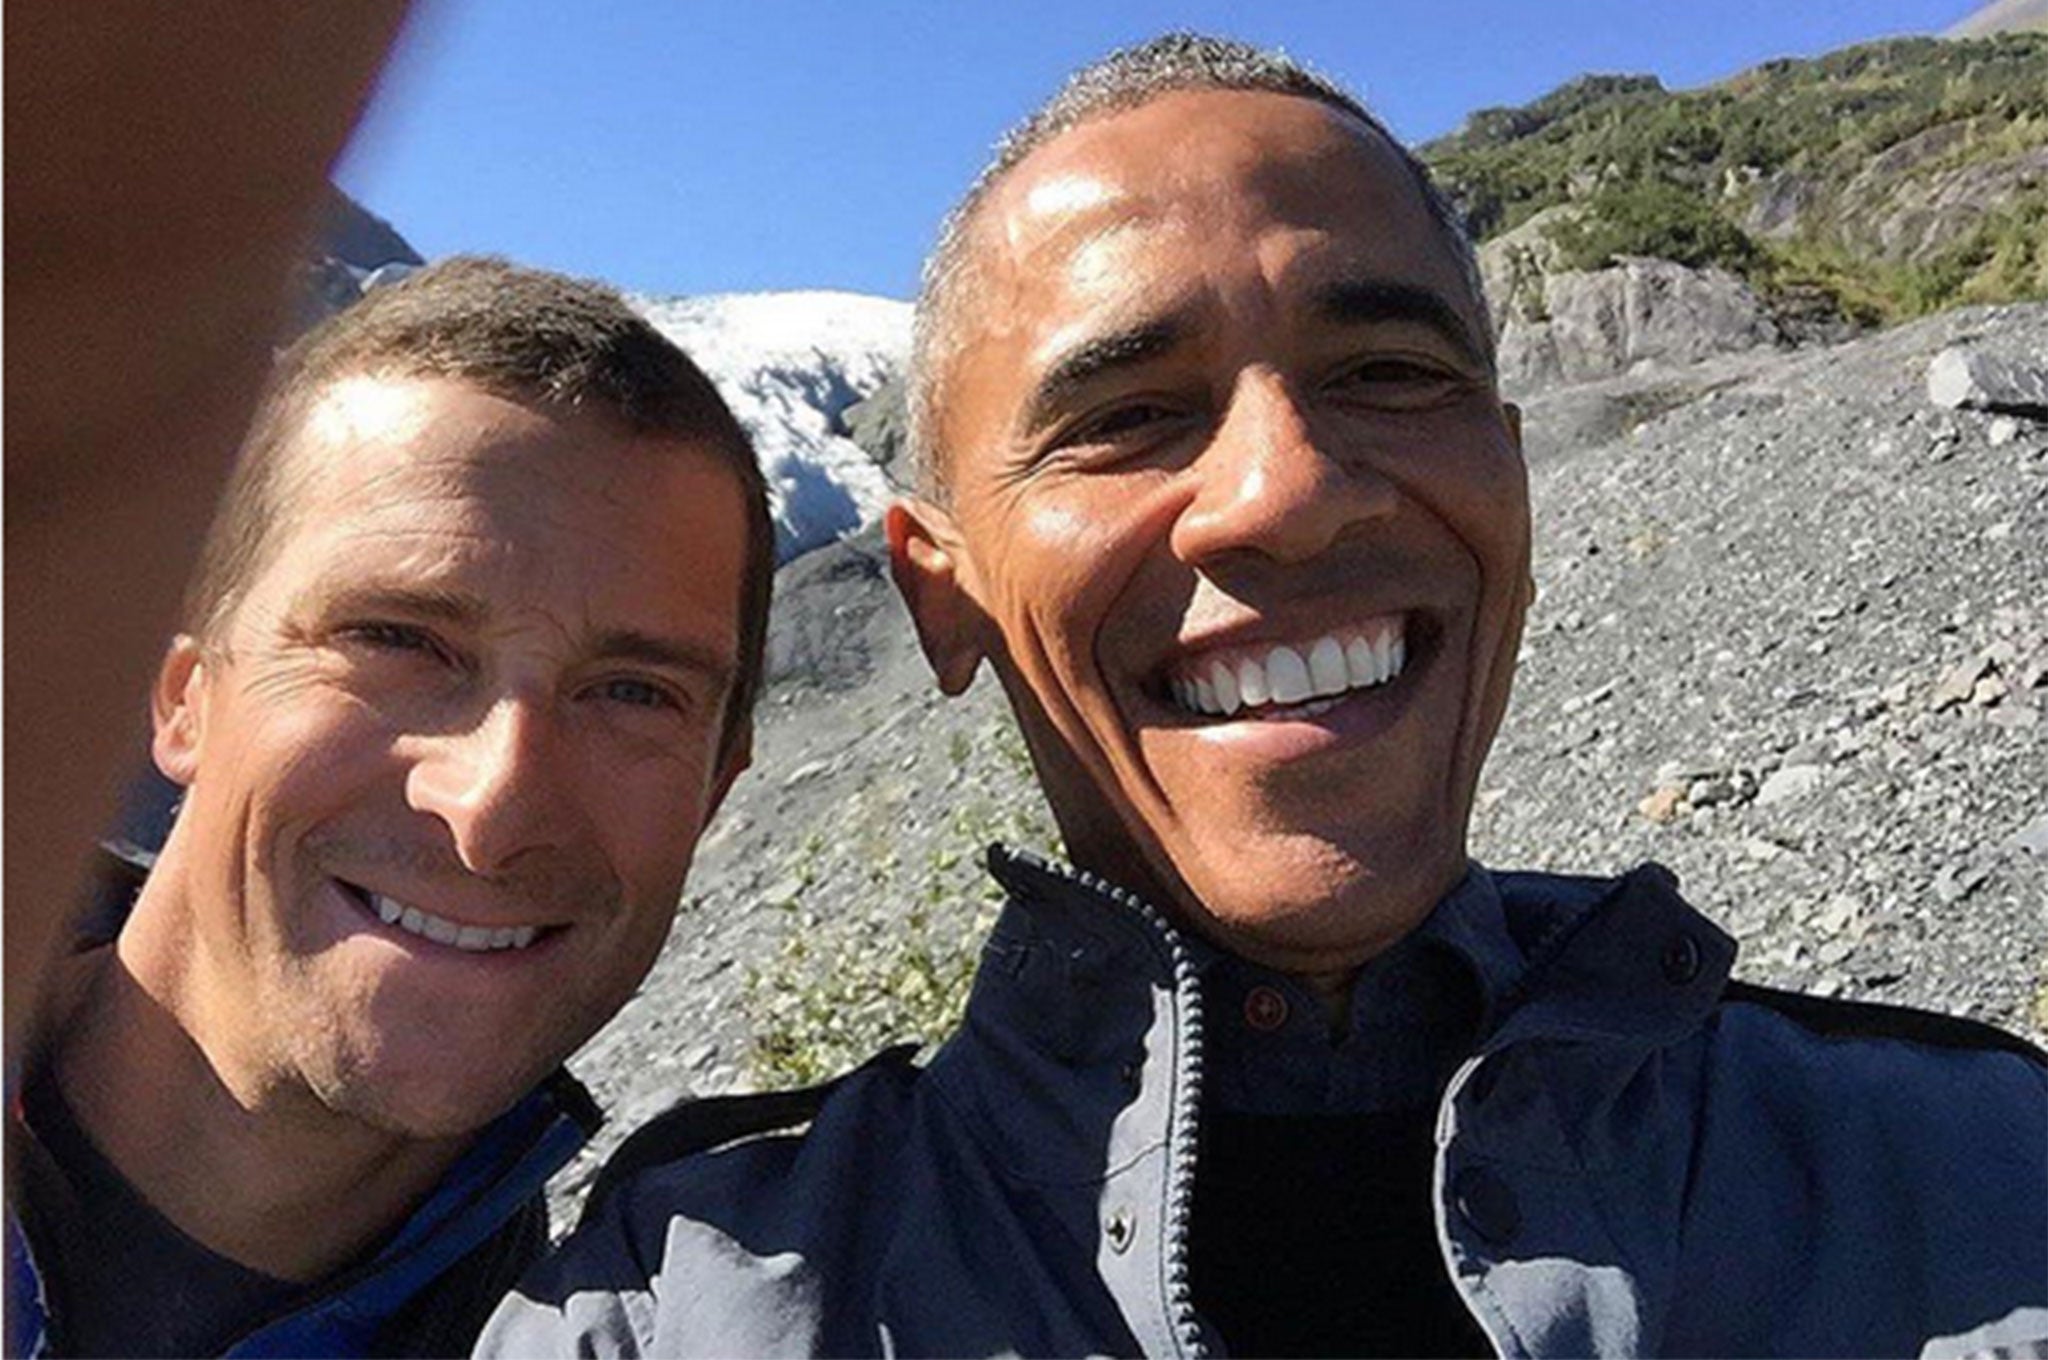 Bear Grylls and Barack Obama go wild in Alaska